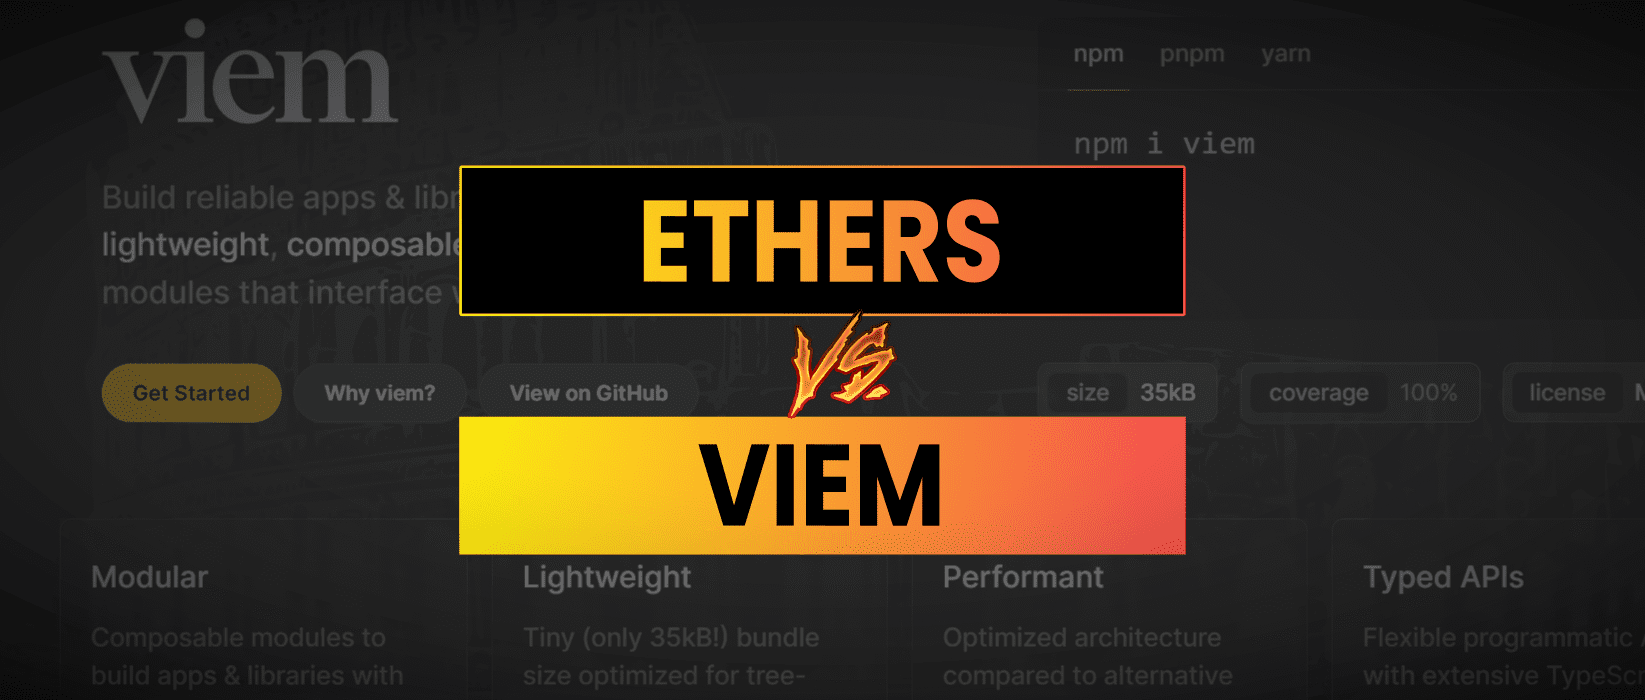 Ethers vs VIEM